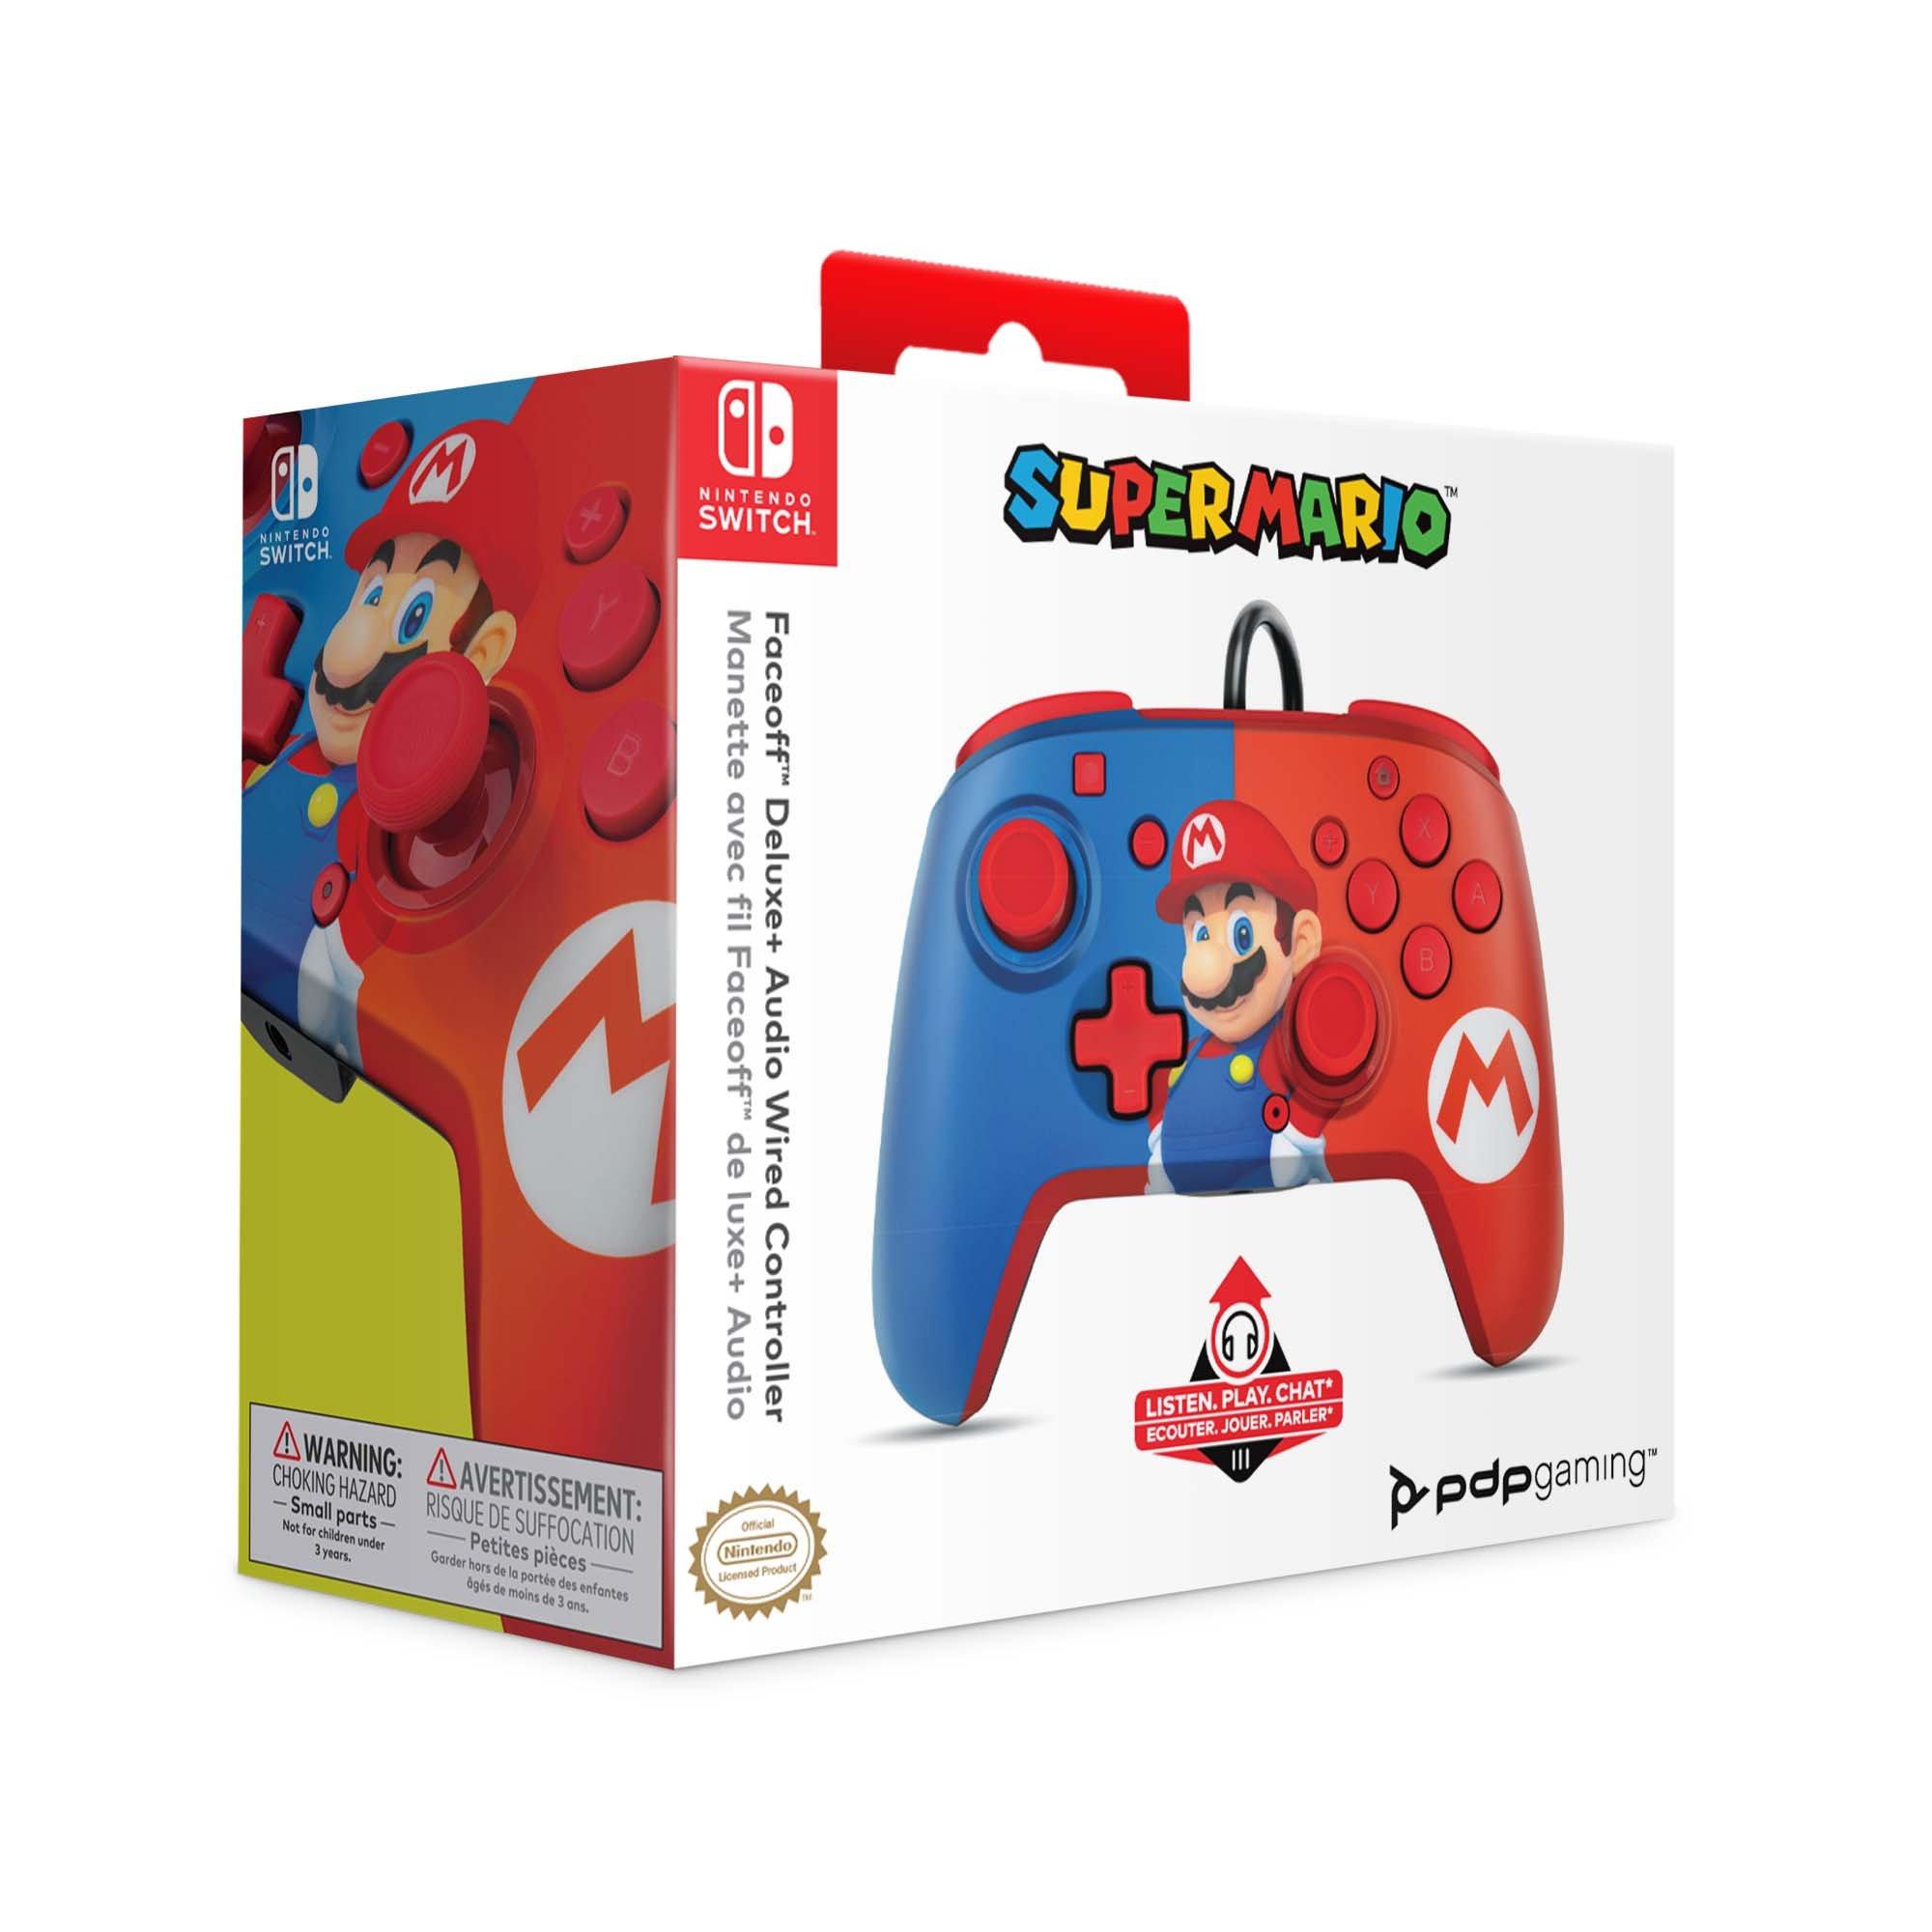 HORIPAD Mini (Super Mario Series - Peach) for Nintendo Switch